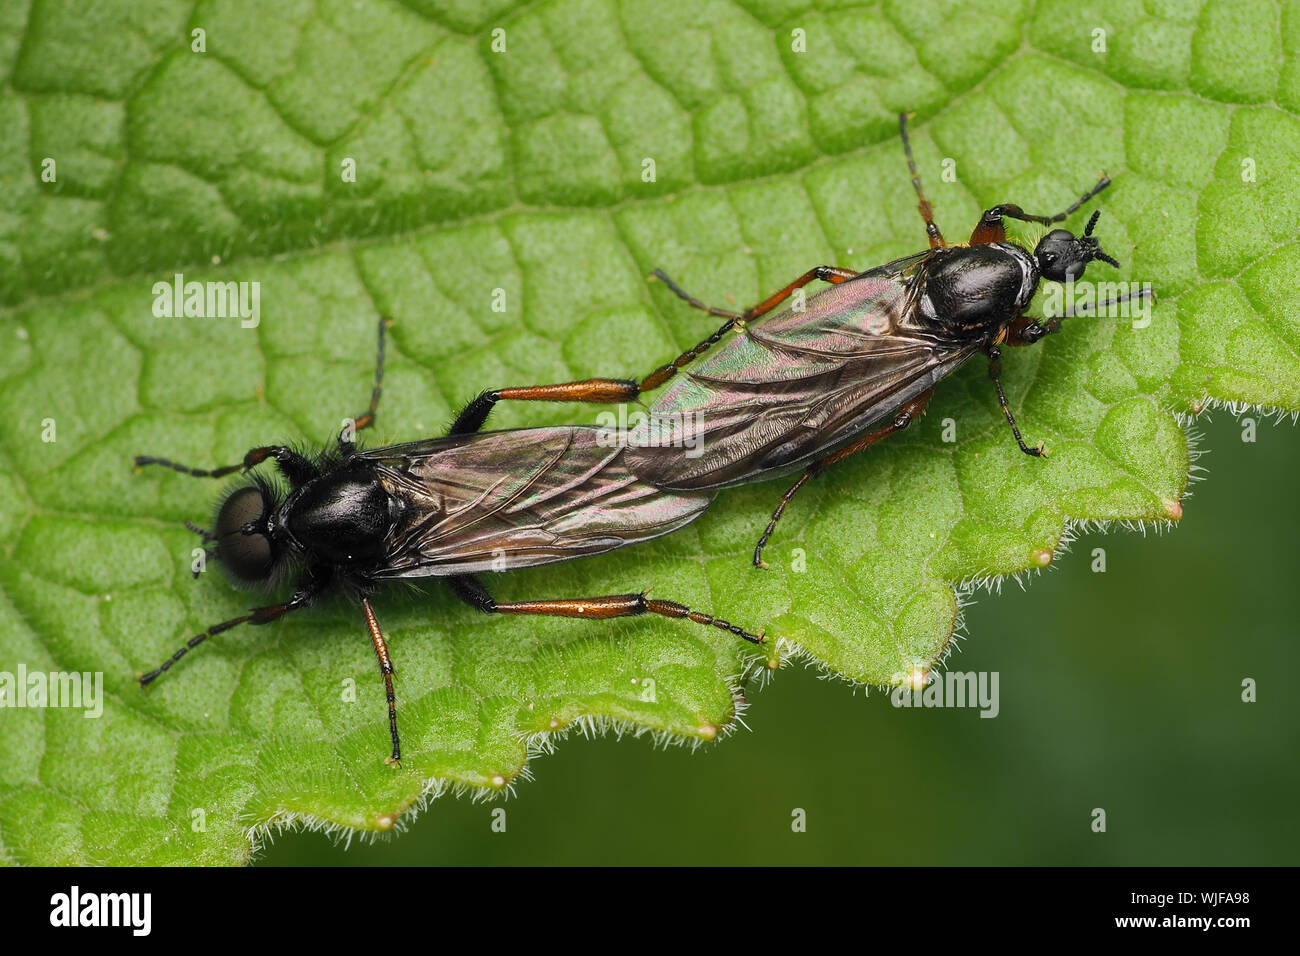 Mating Bibio sp flies on plant leaf. Tipperary, Ireland Stock Photo